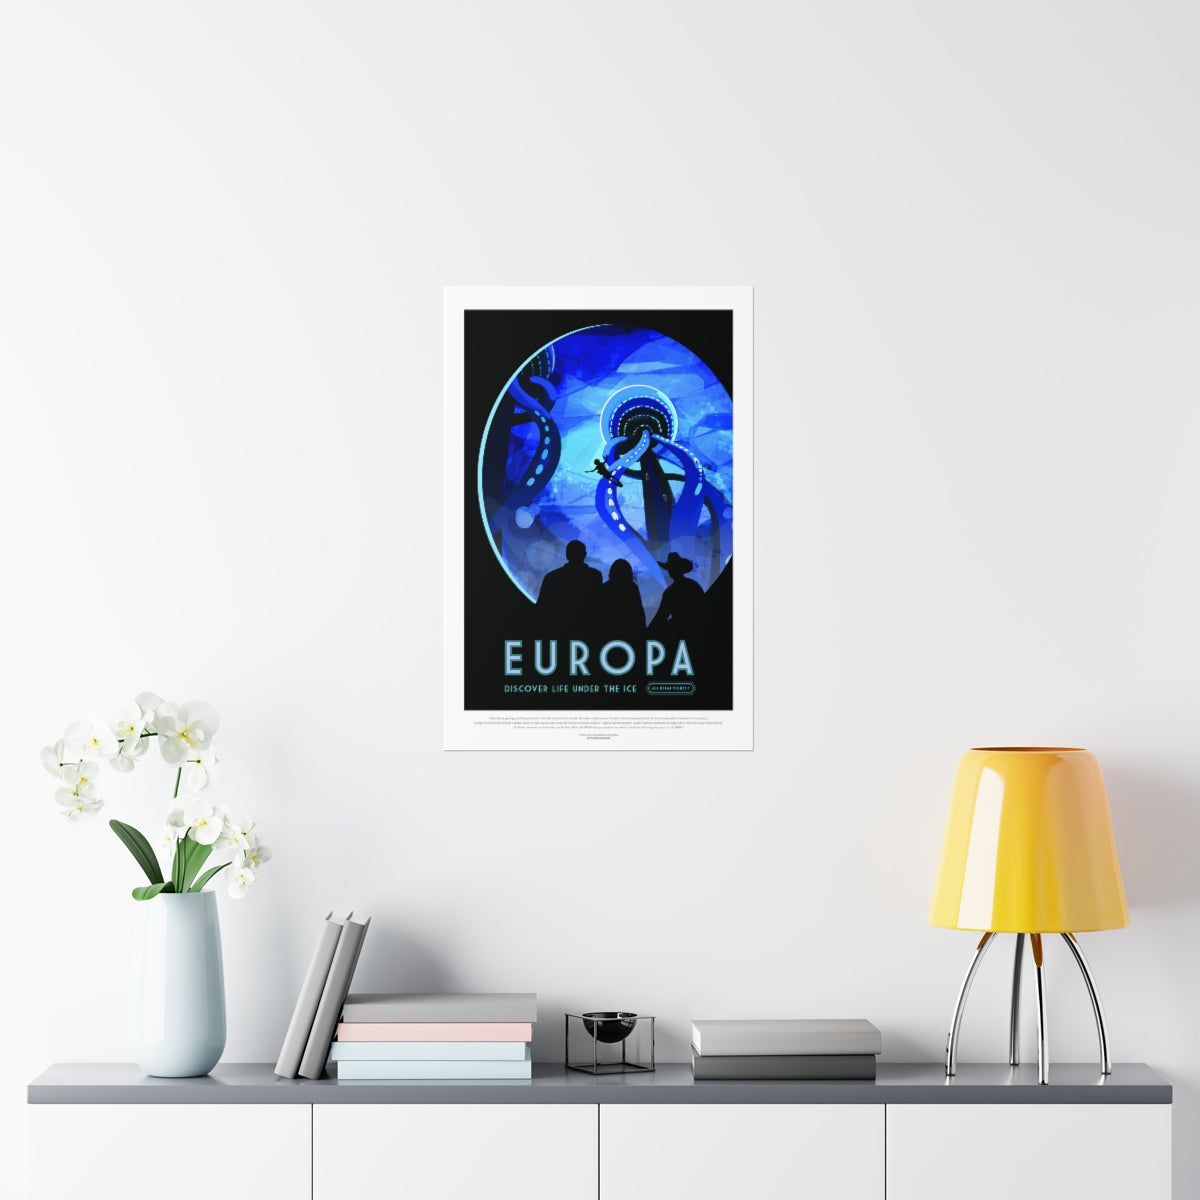 NASA - Visions of the Future : Europa